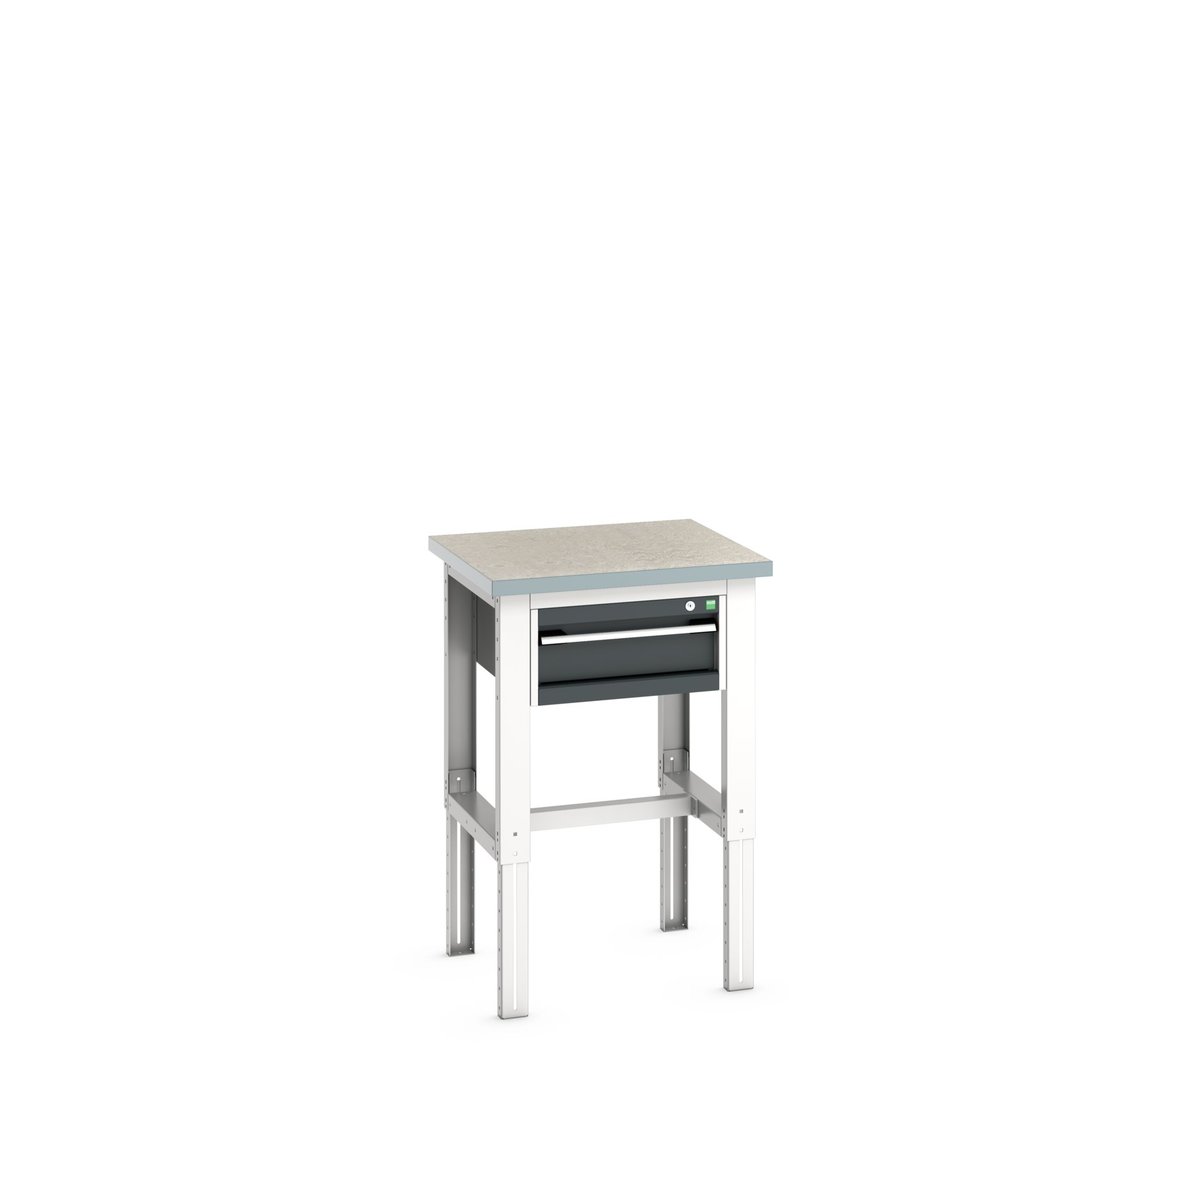 41003532. - cubio framework bench (lino)